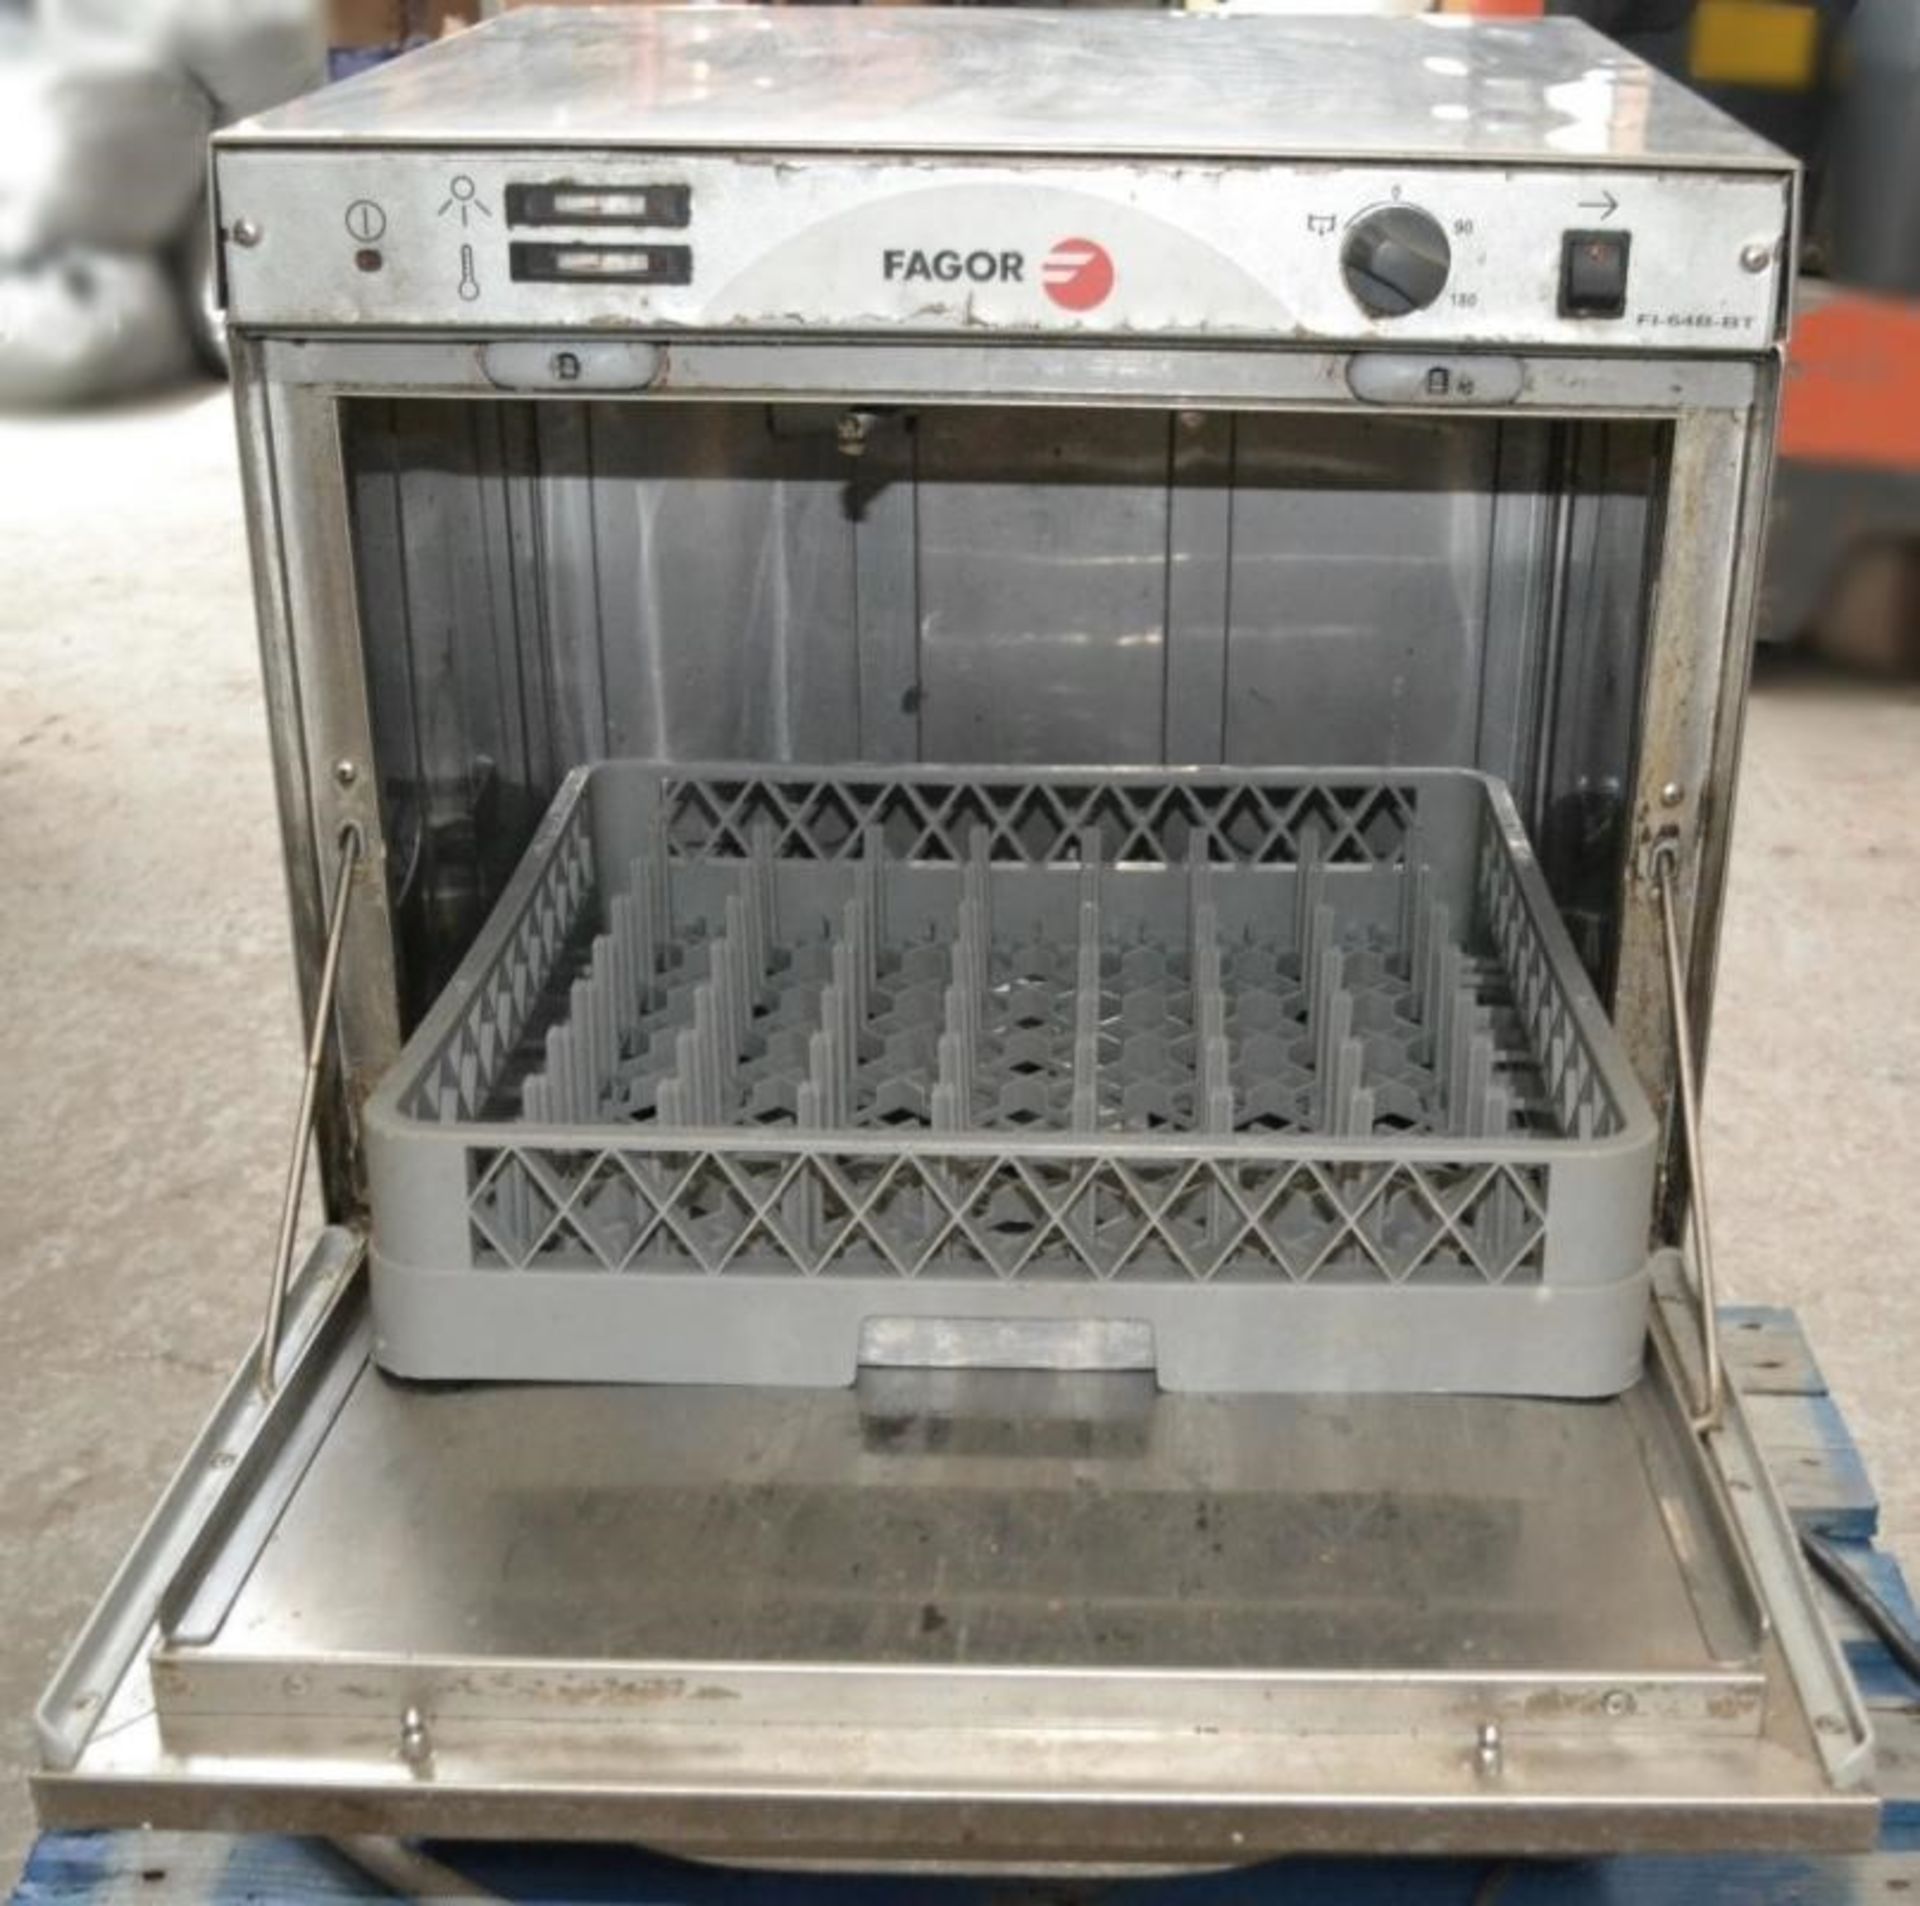 1 x FAGOR Dishwasher - Model: FI-64B-BT - Dimensions: H82 x W59.5 x D66cm - Ref: LH256 - CL261 - Loc - Image 9 of 12